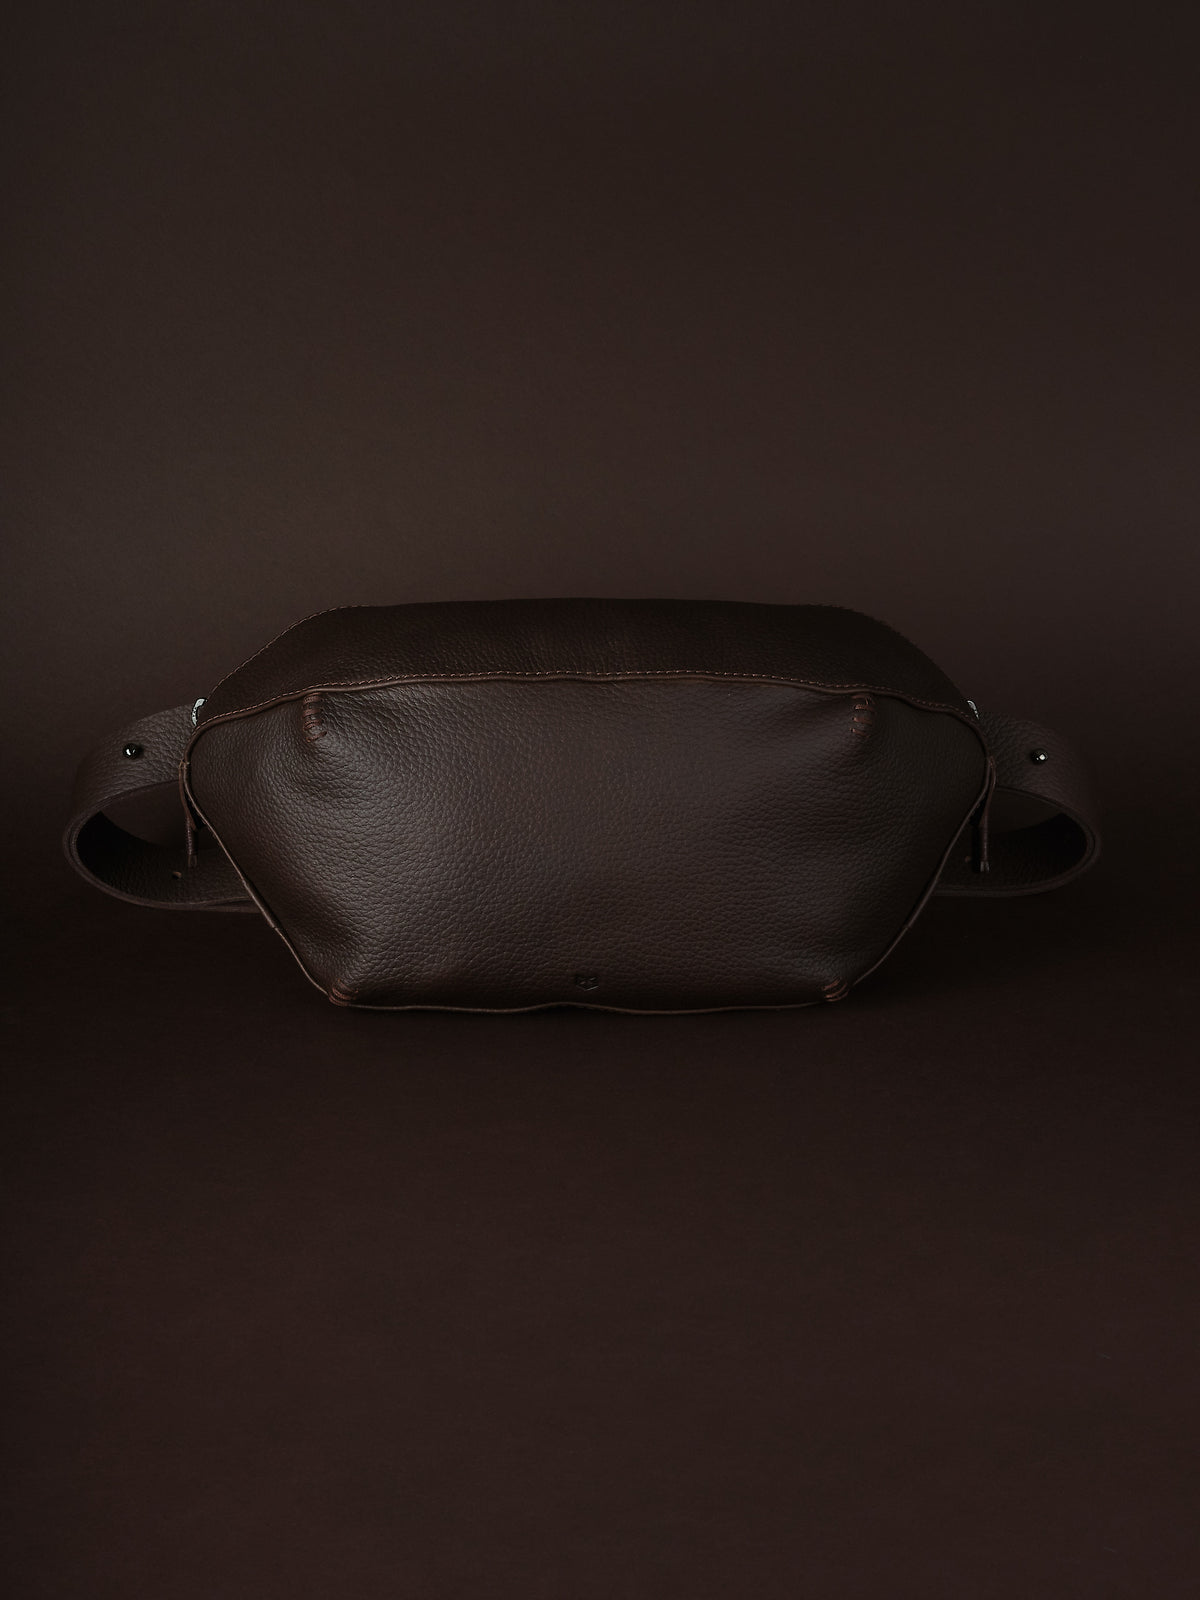 Mens Fanny Pack. Sling Bag Dark Brown by Capra Leather